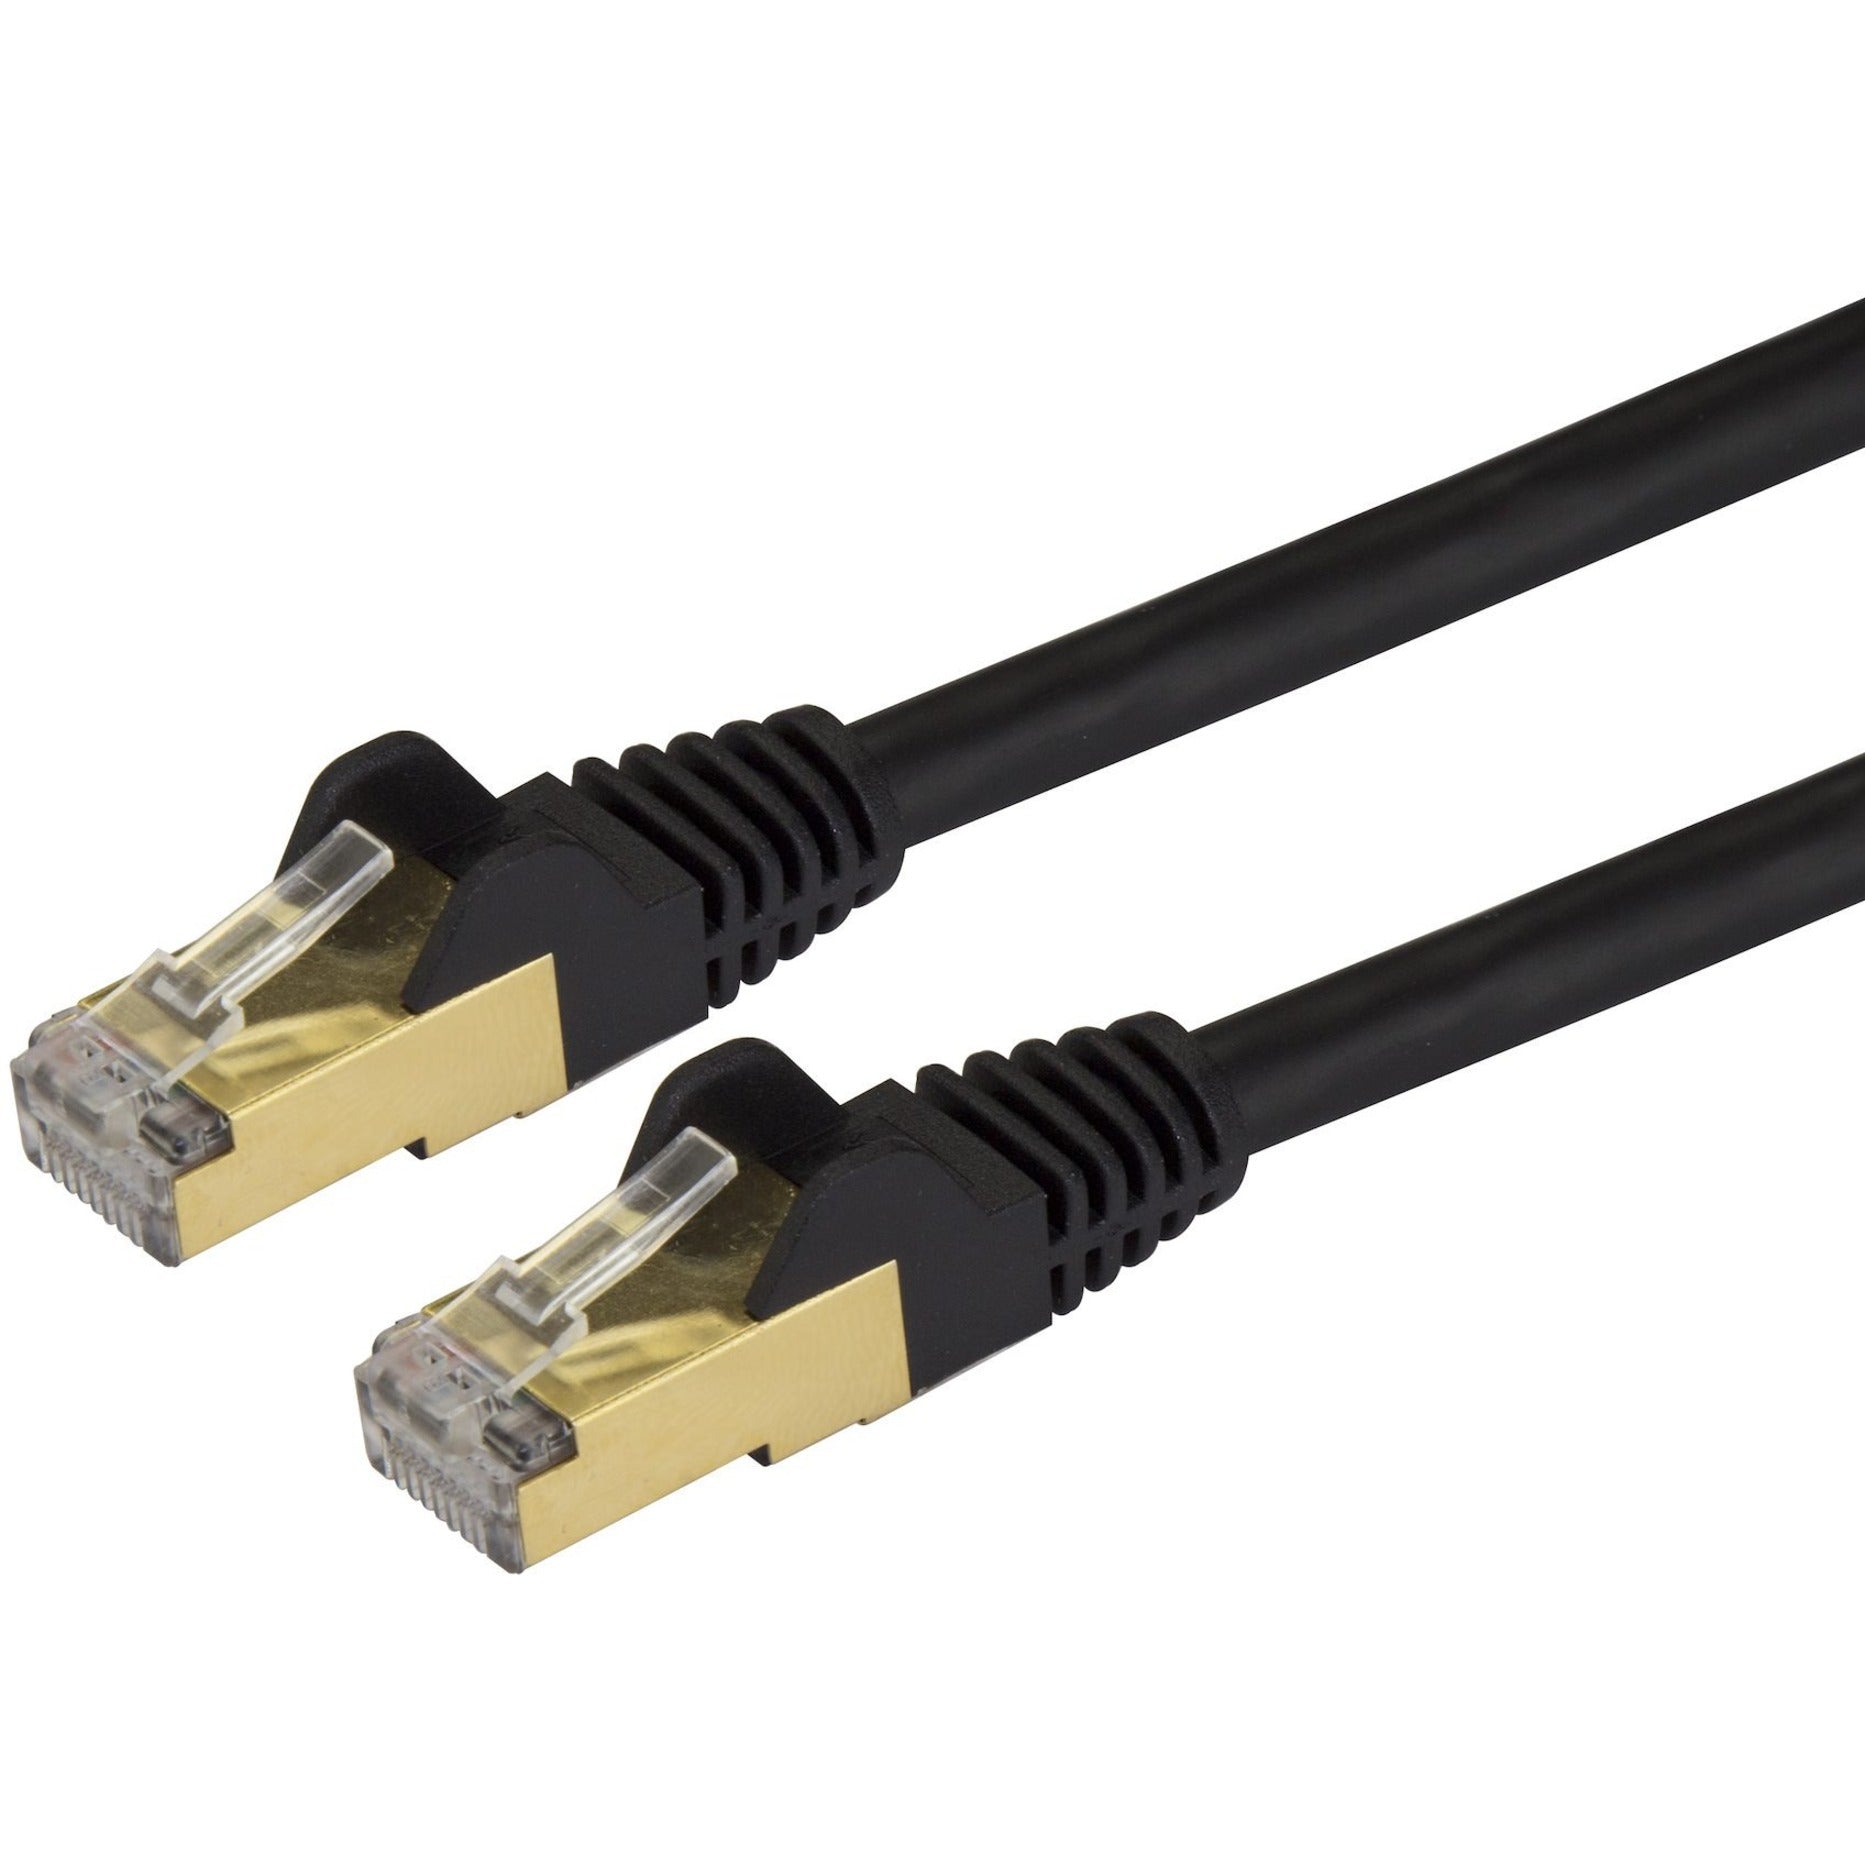 StarTech.com C6ASPAT6INBK Cat6a Ethernet Patch Cable - Shielded (STP) - 6 in., Black, Short Ethernet Cord